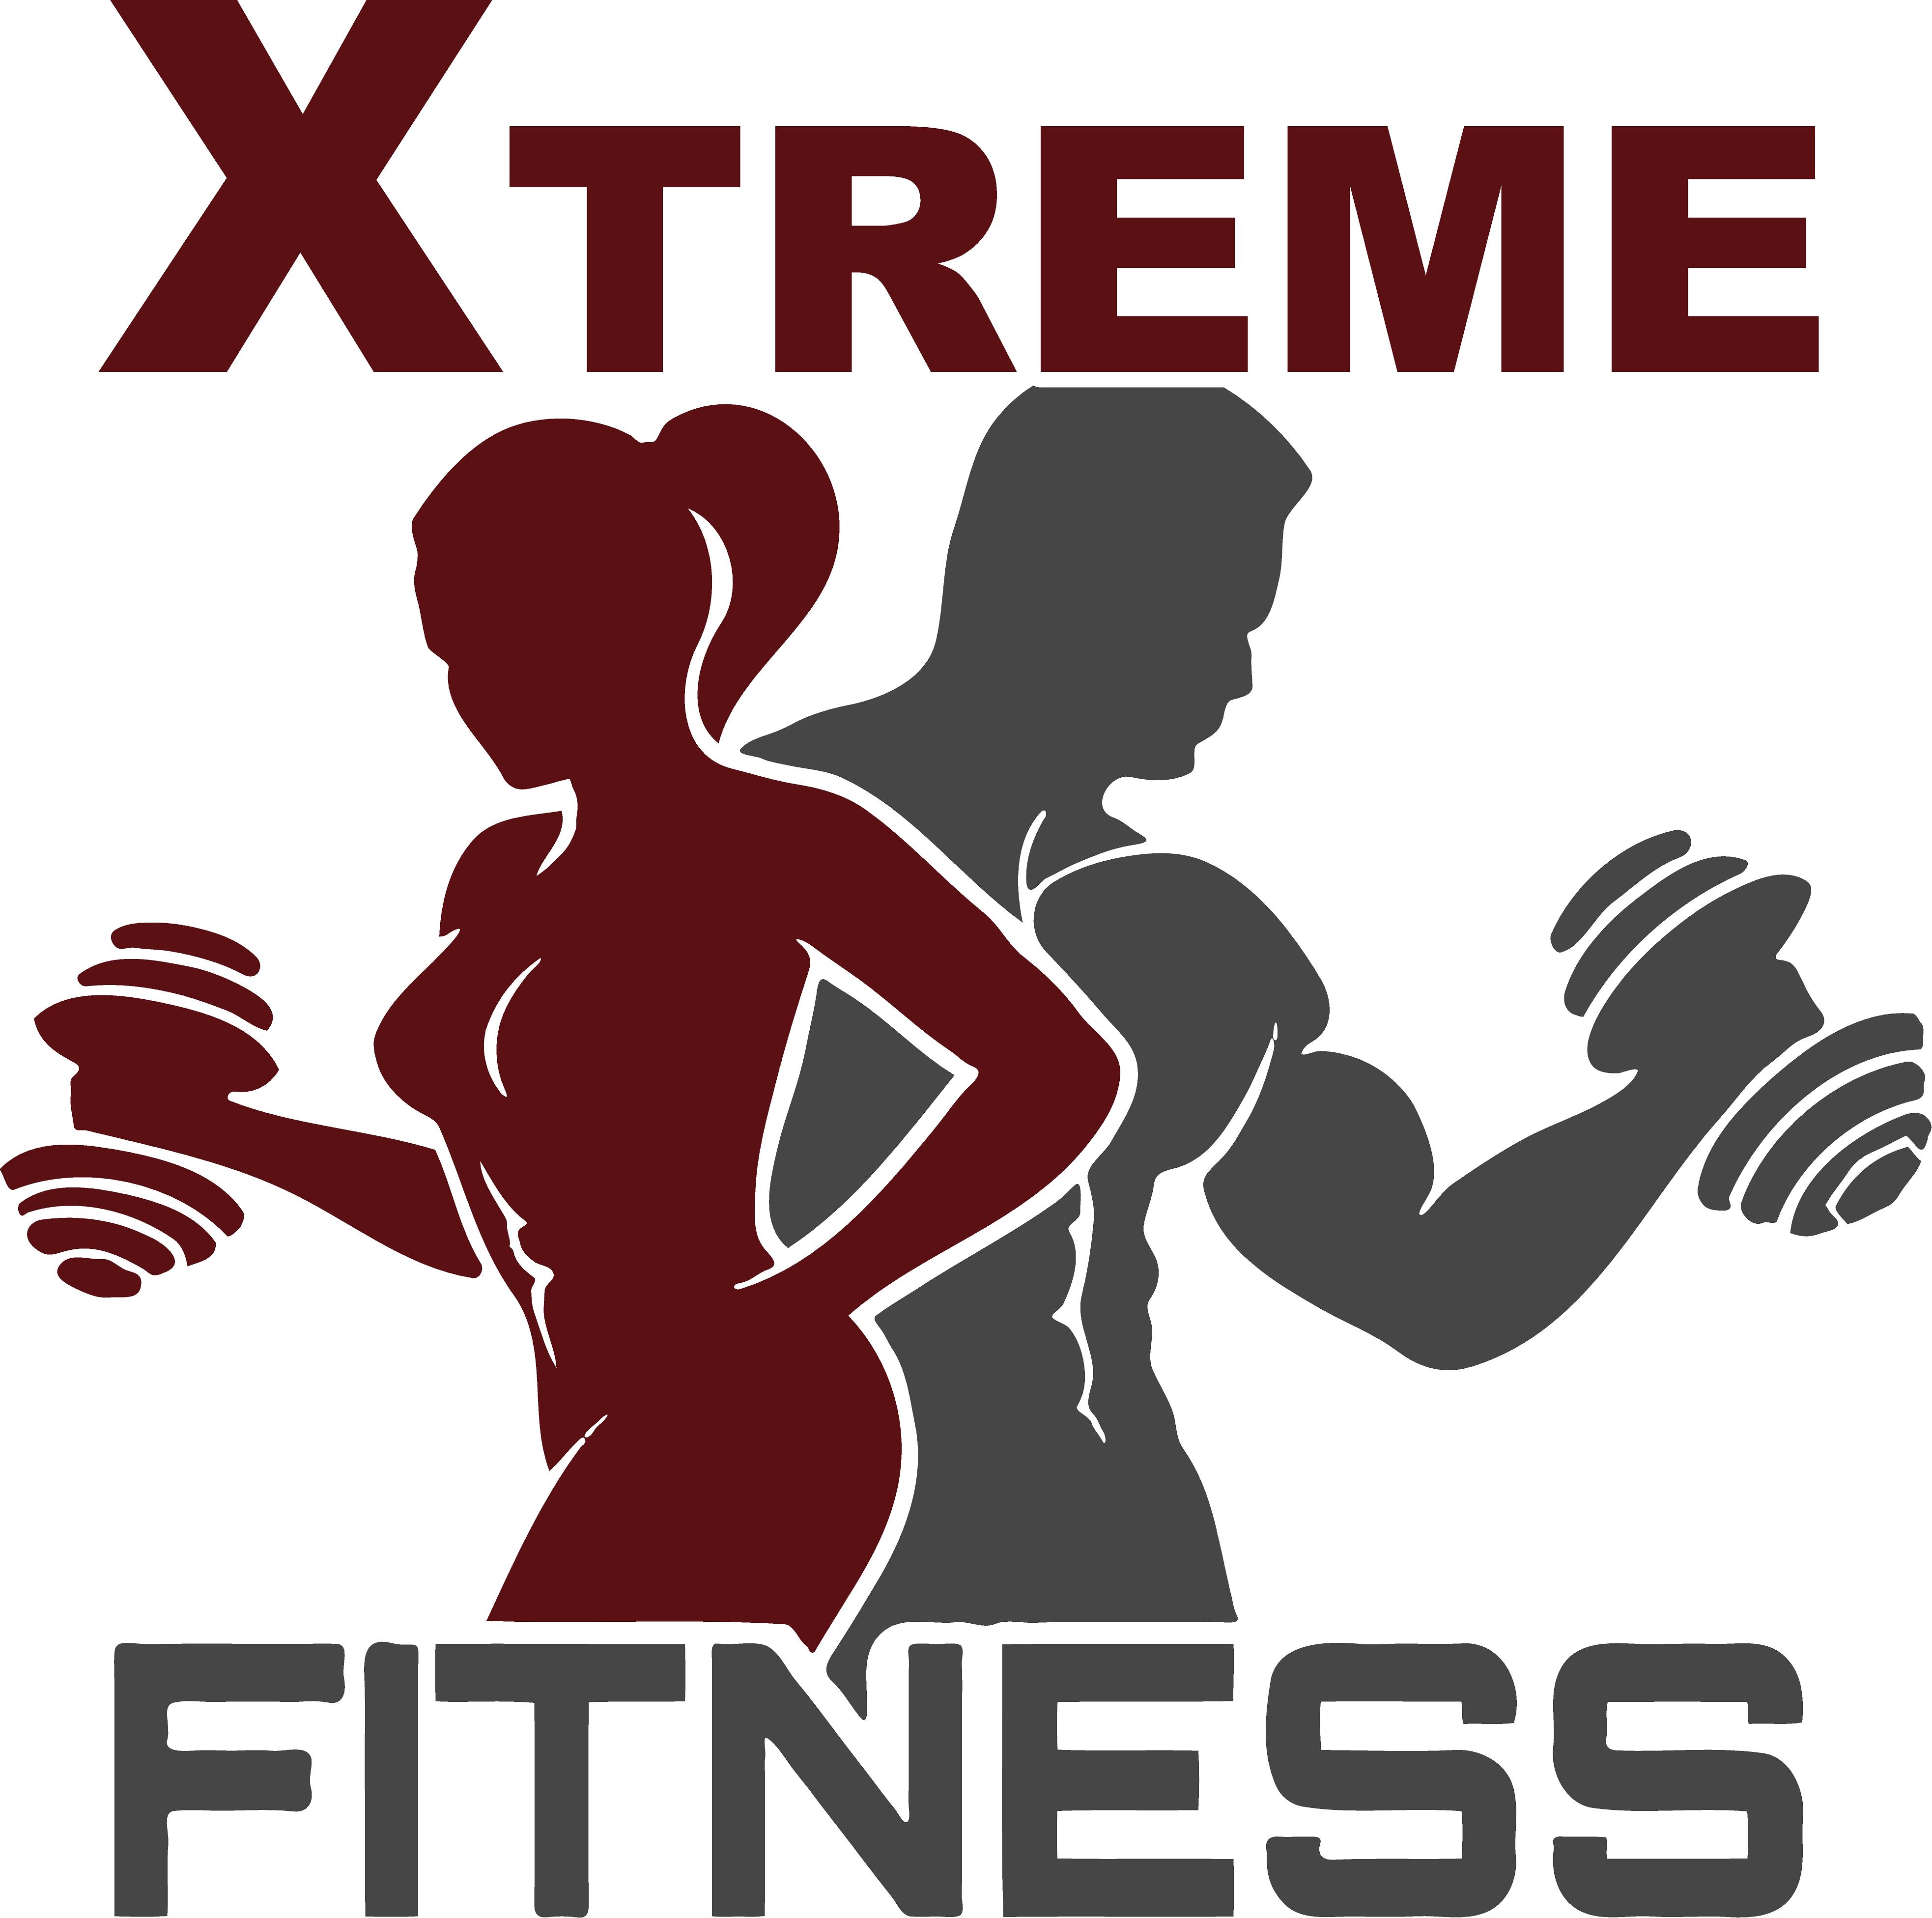 Xtreme Fitness | Login